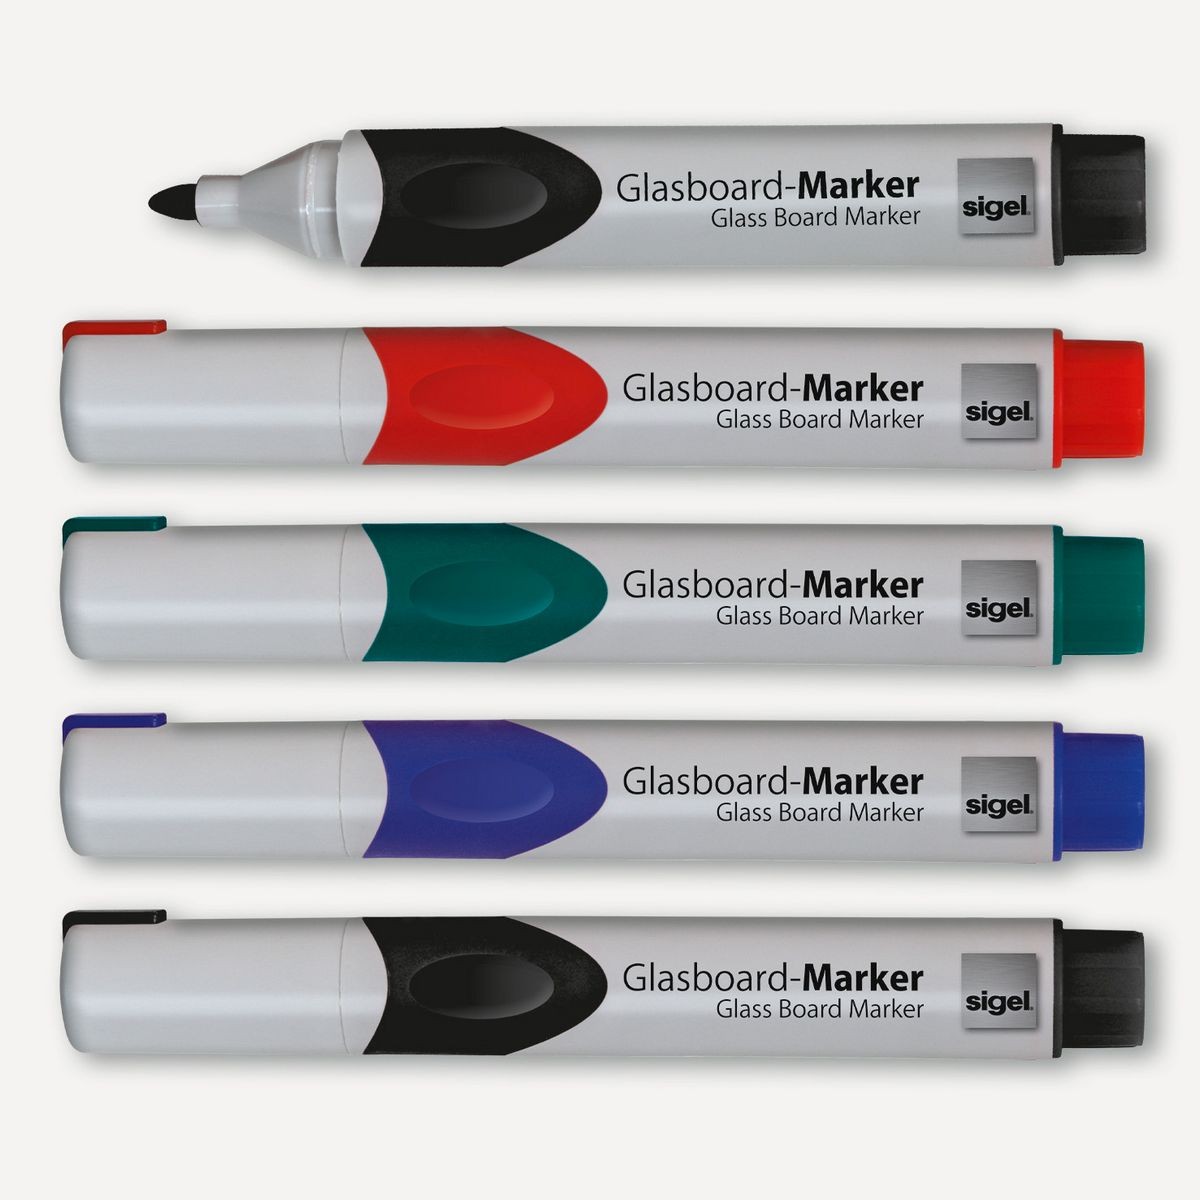 GL711 - Sigel - Glass Board Markers, 2-3 mm round nib - Multicolor